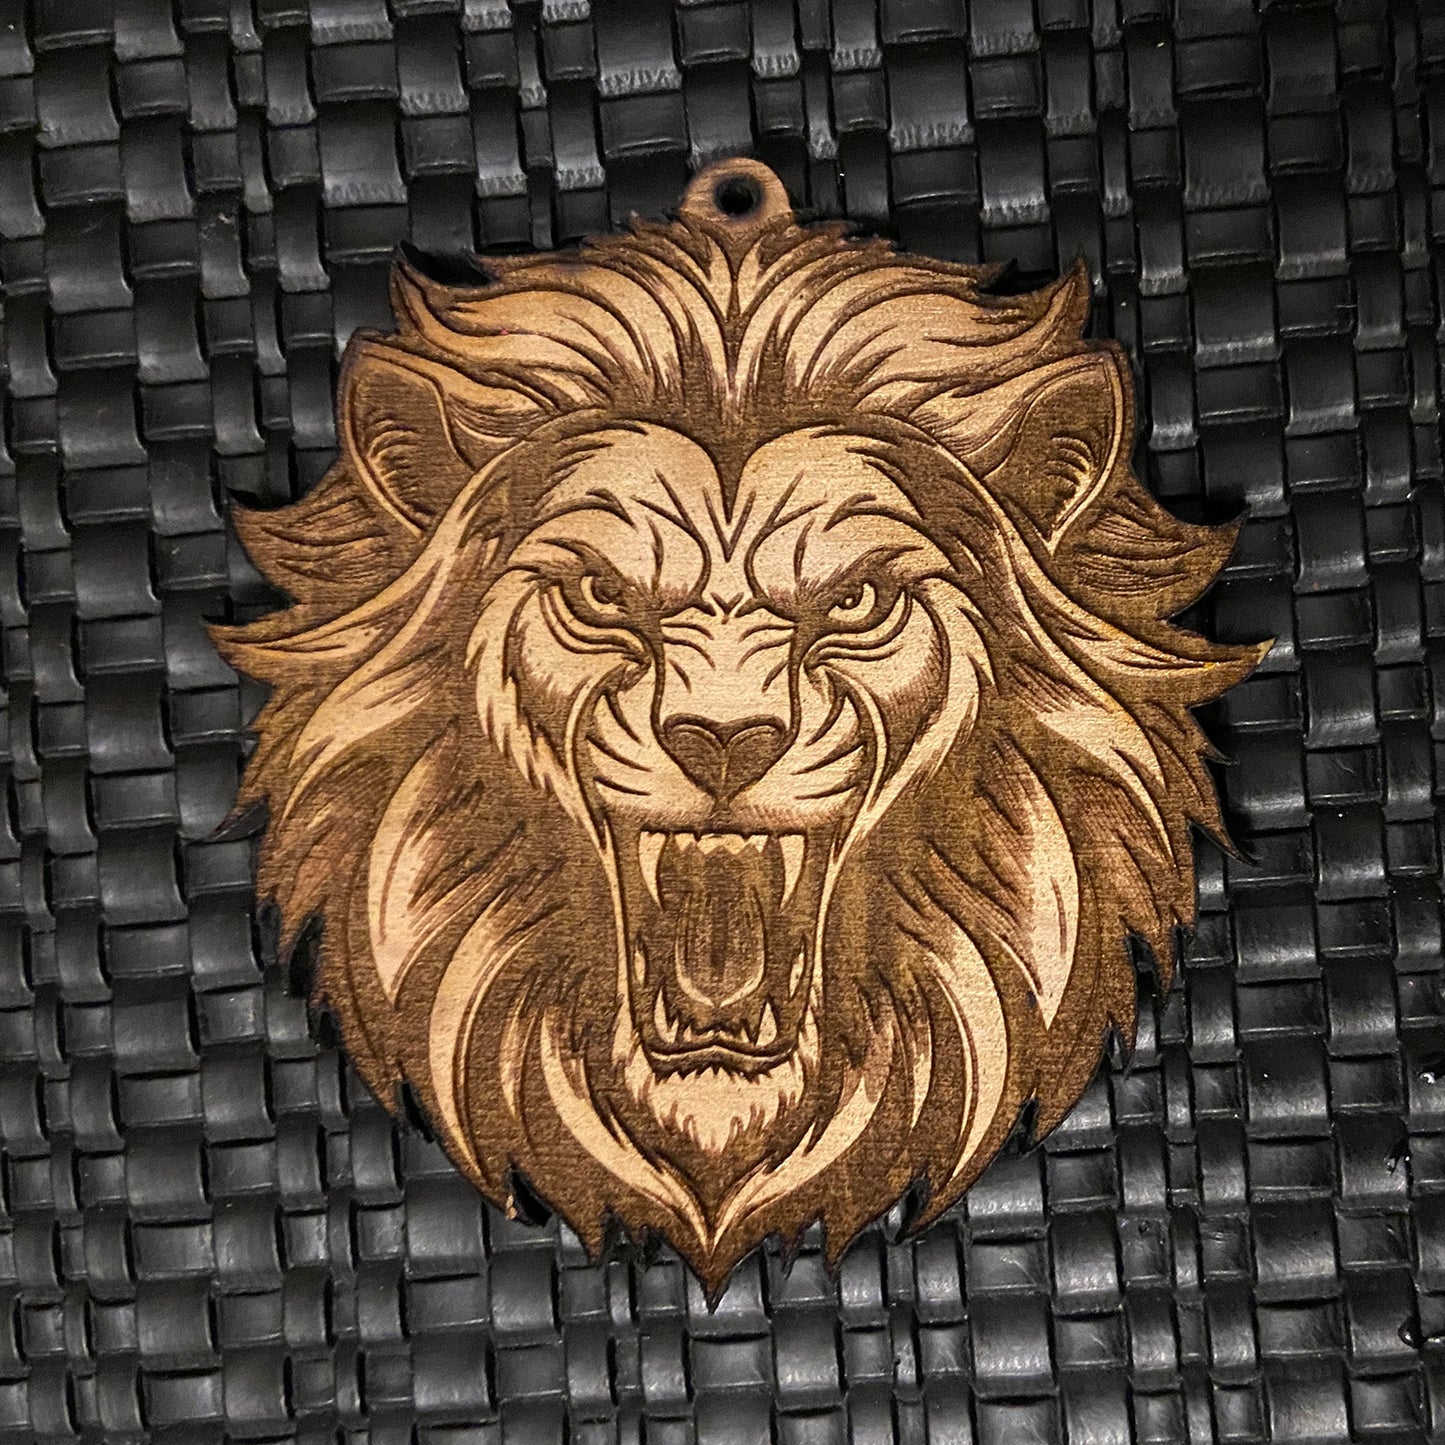 Fierce Lion Keychain - Glowforge